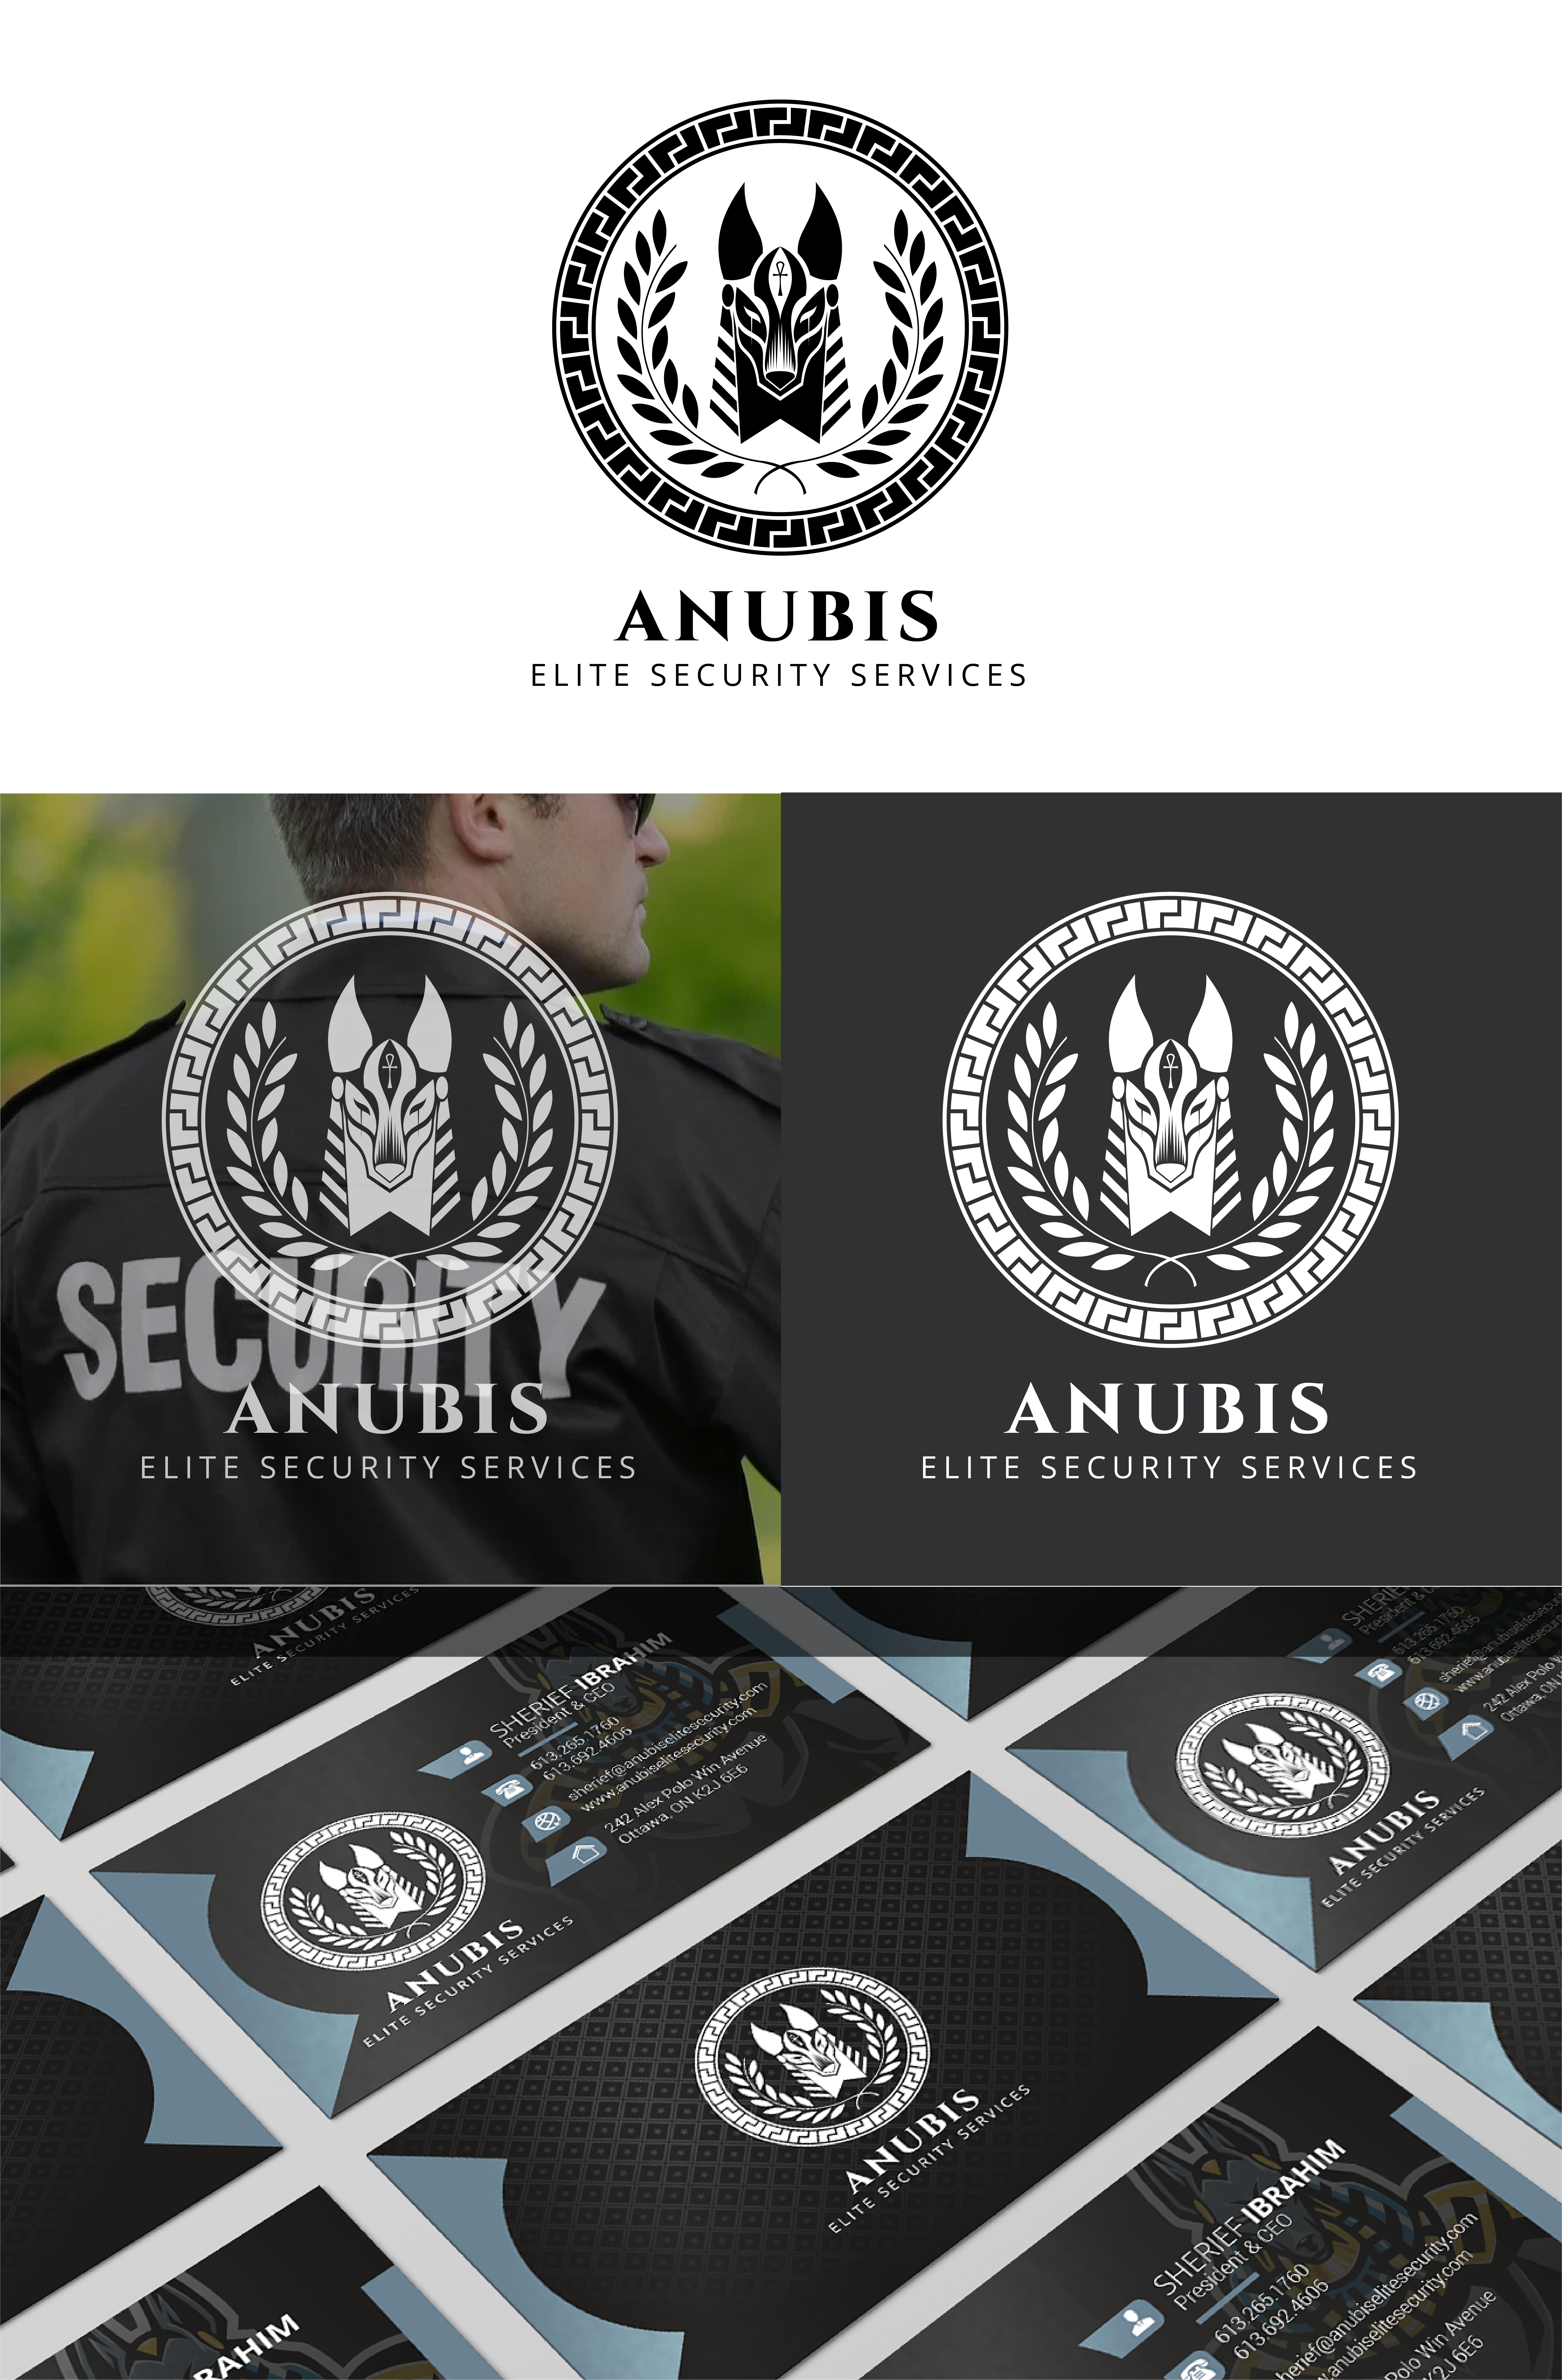 anubis-ess-logo-concepts-final